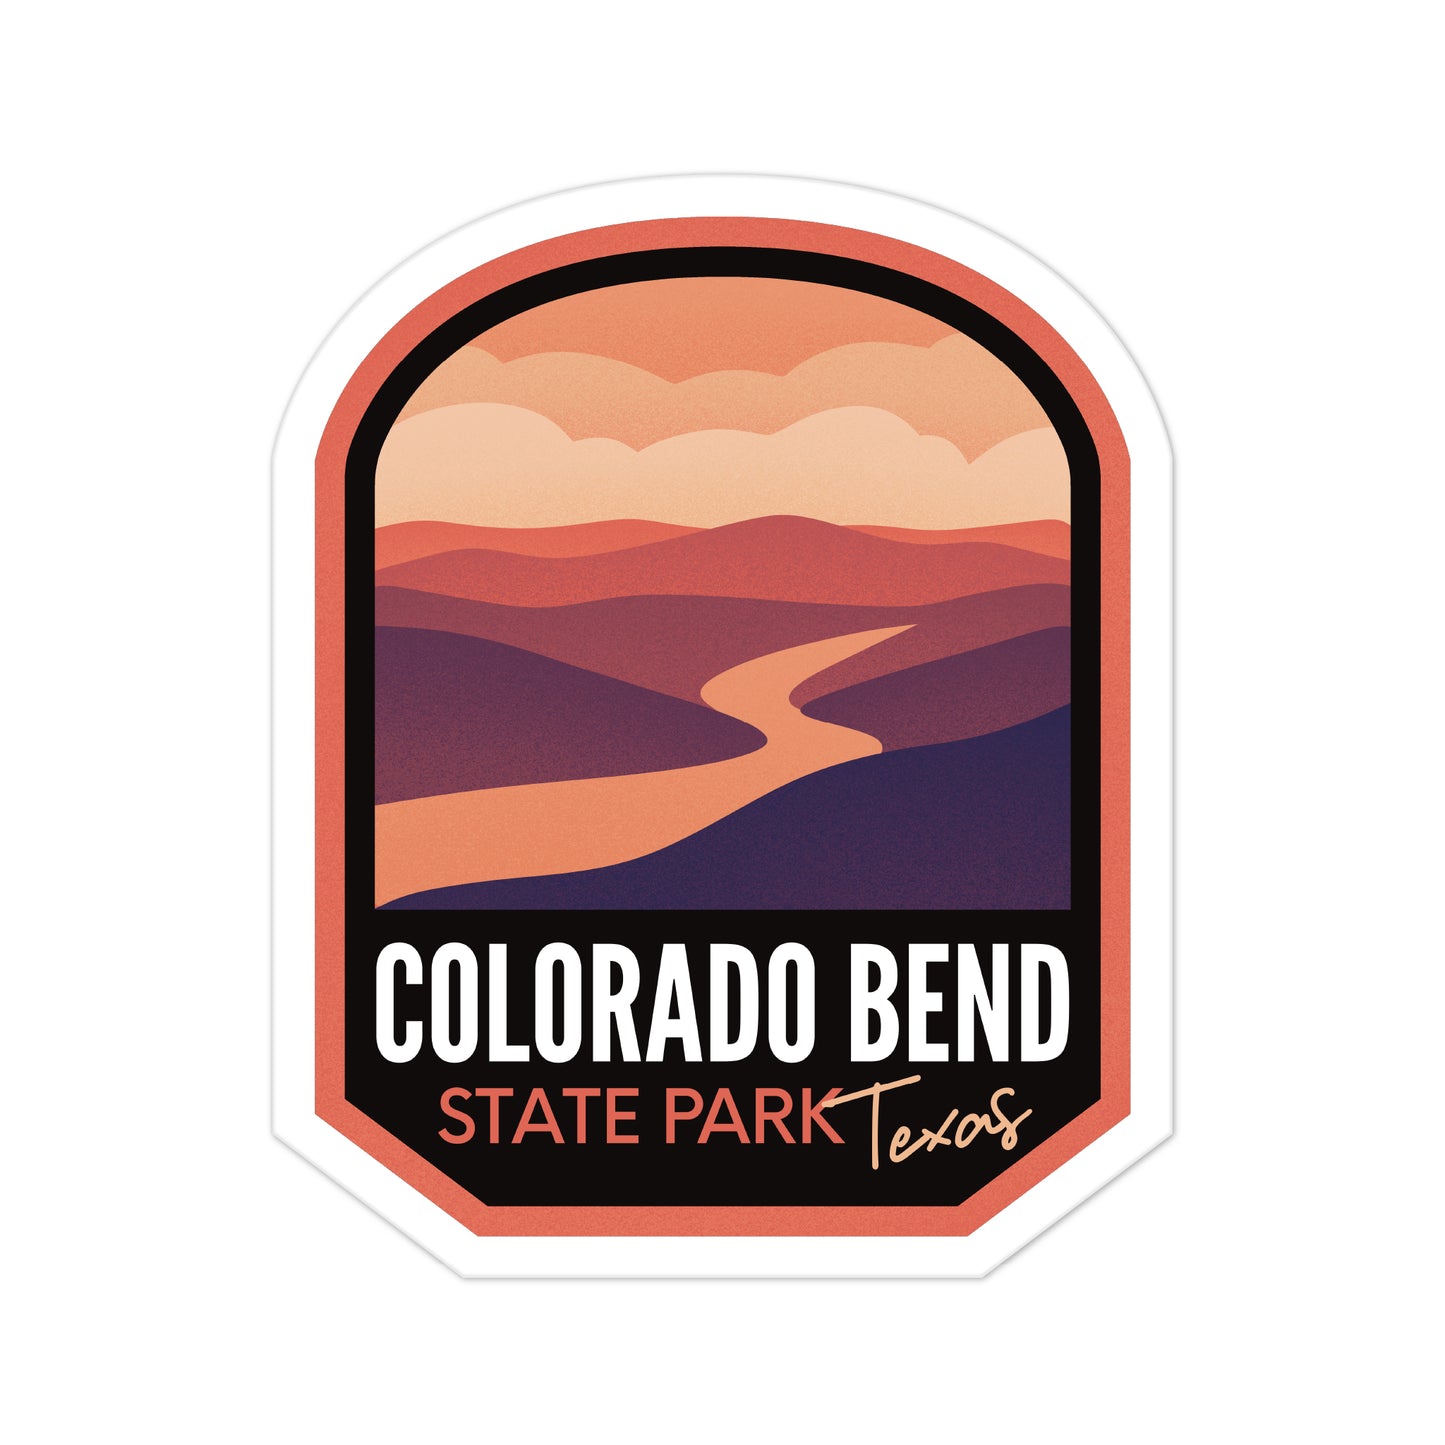 A sticker of Colorado Bend State Park